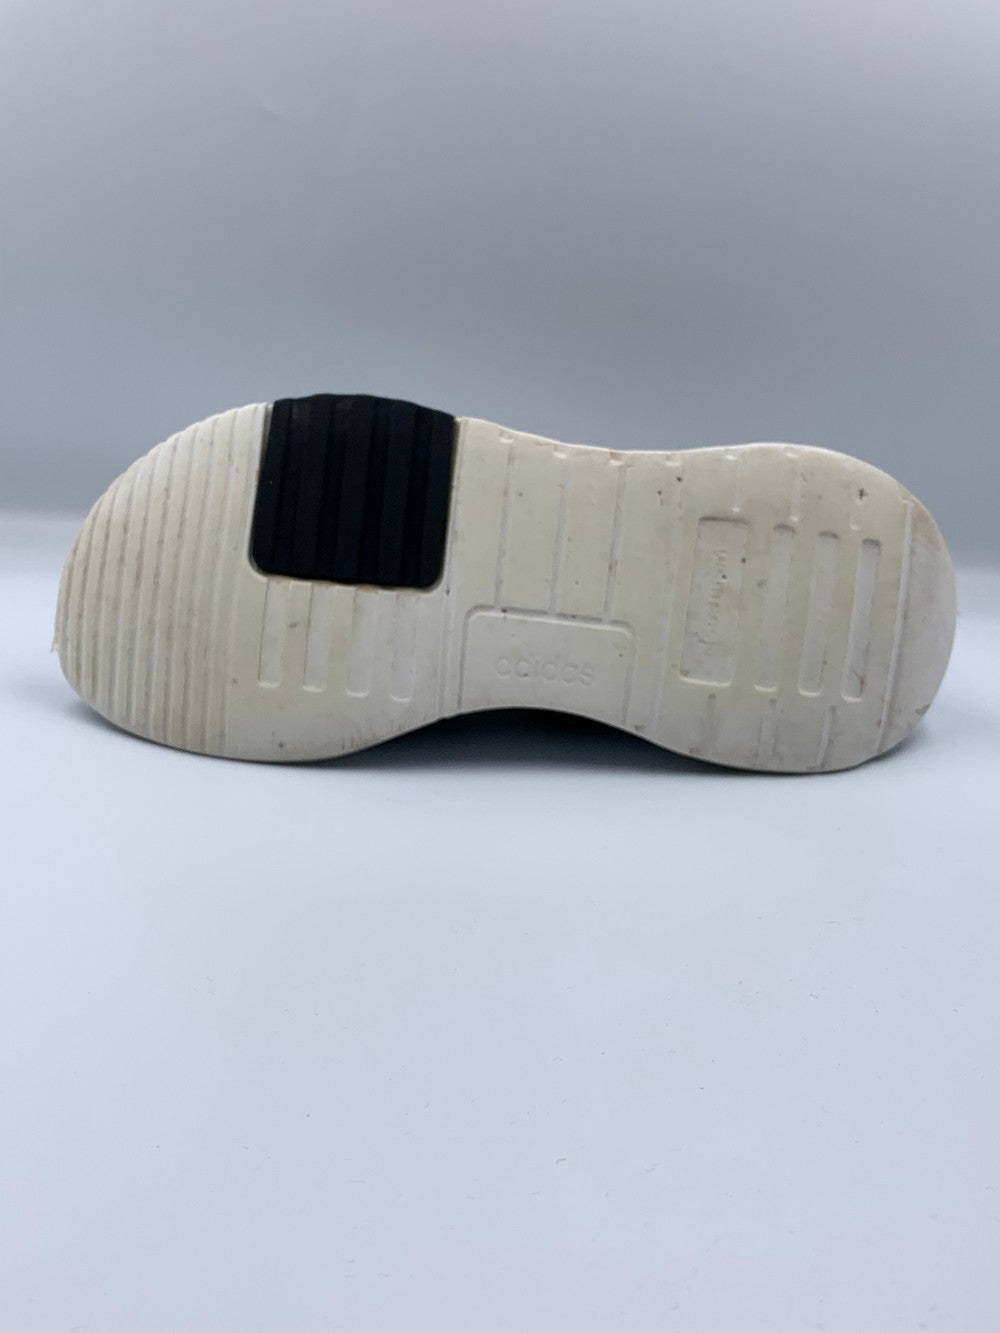 Adidas Cloud Foam Original Brand Sports Black & Khaki Running For Women Shoes